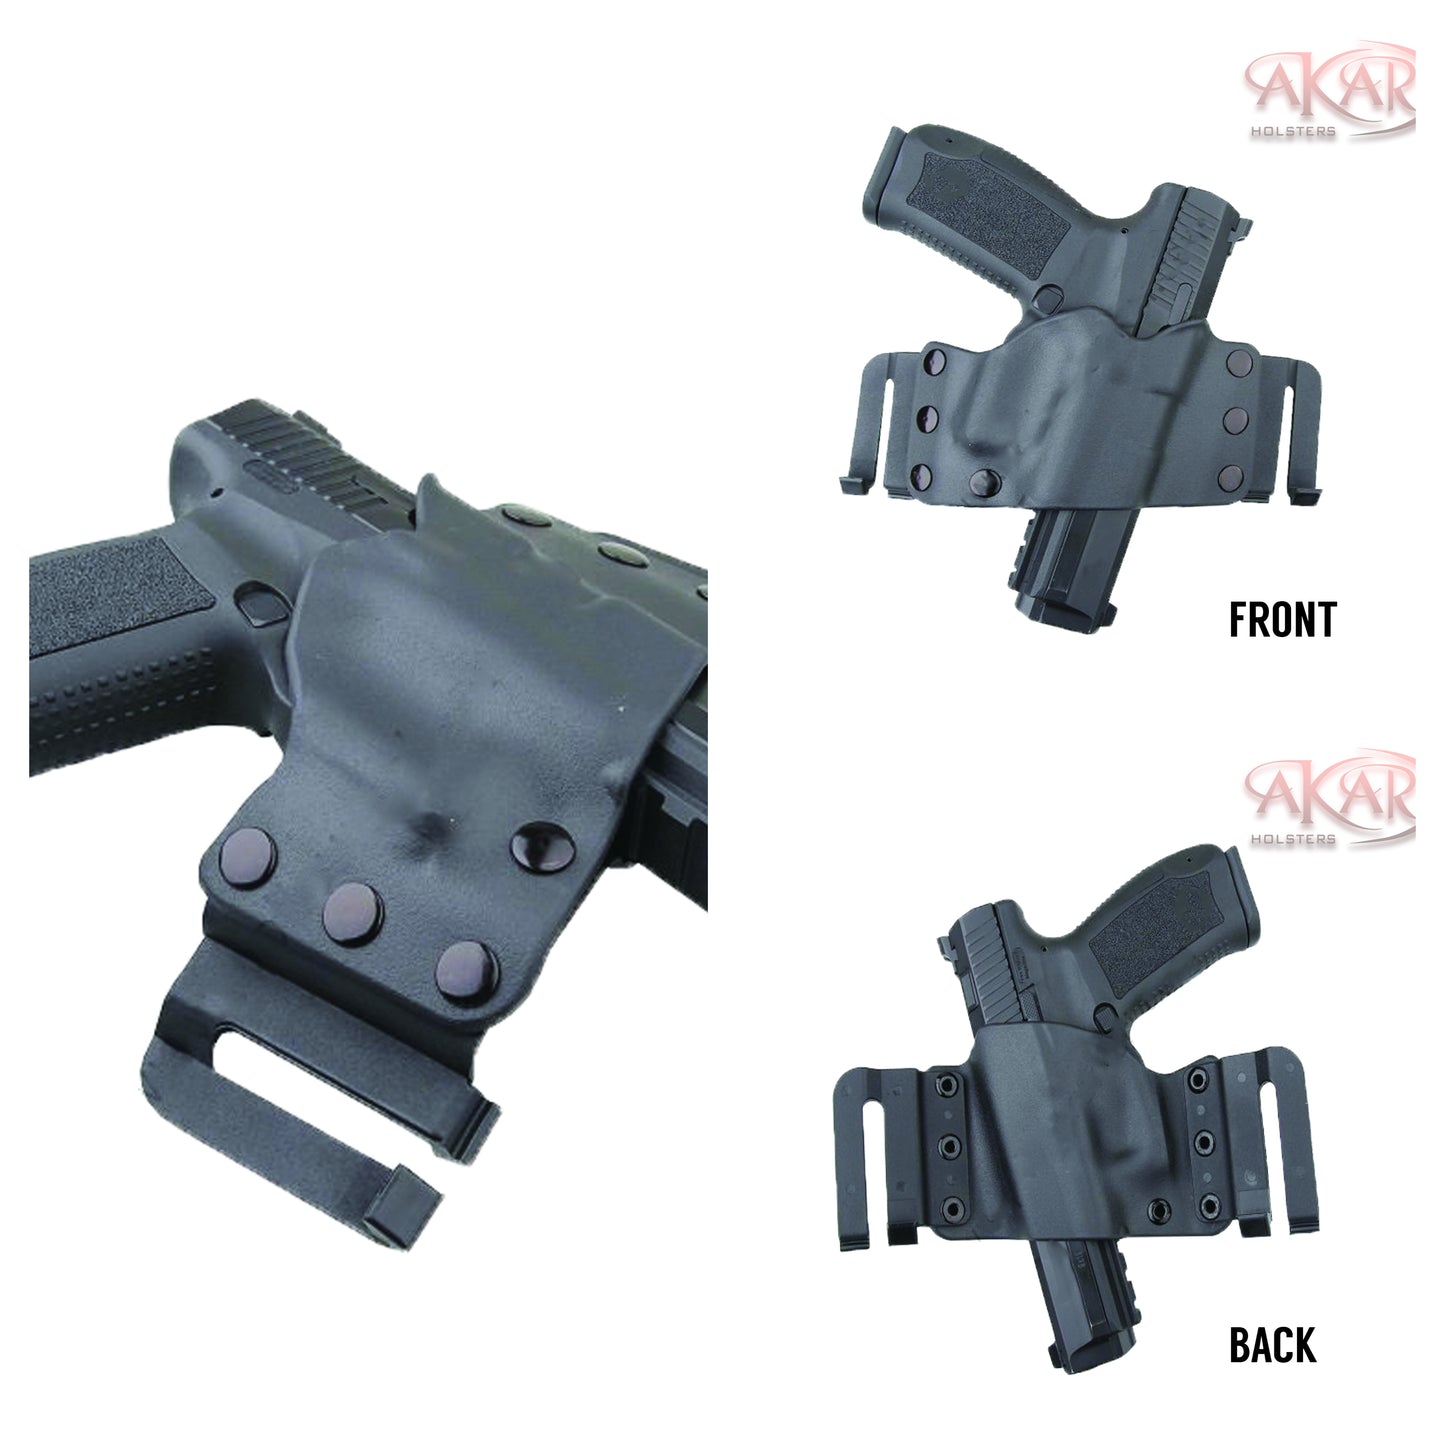 H&K USP45 Pistols & Similar Frames - Akar Scorpion OWB Kydex Gun Holster W/Quick Belt Clips